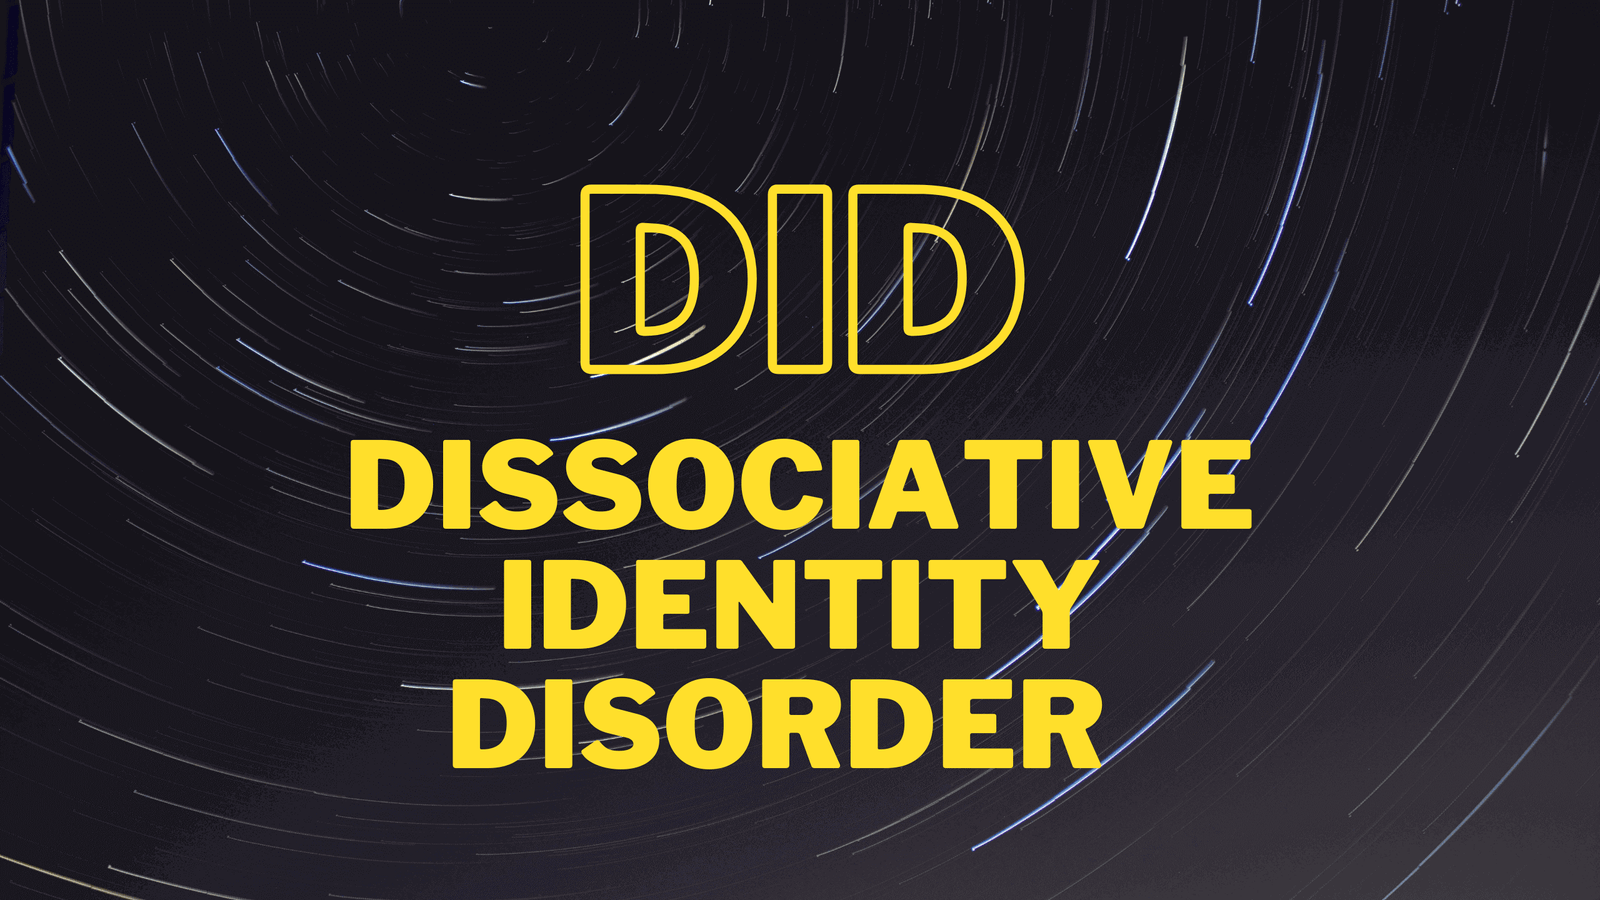 The wonderful world of Dissociative Identity Disorder